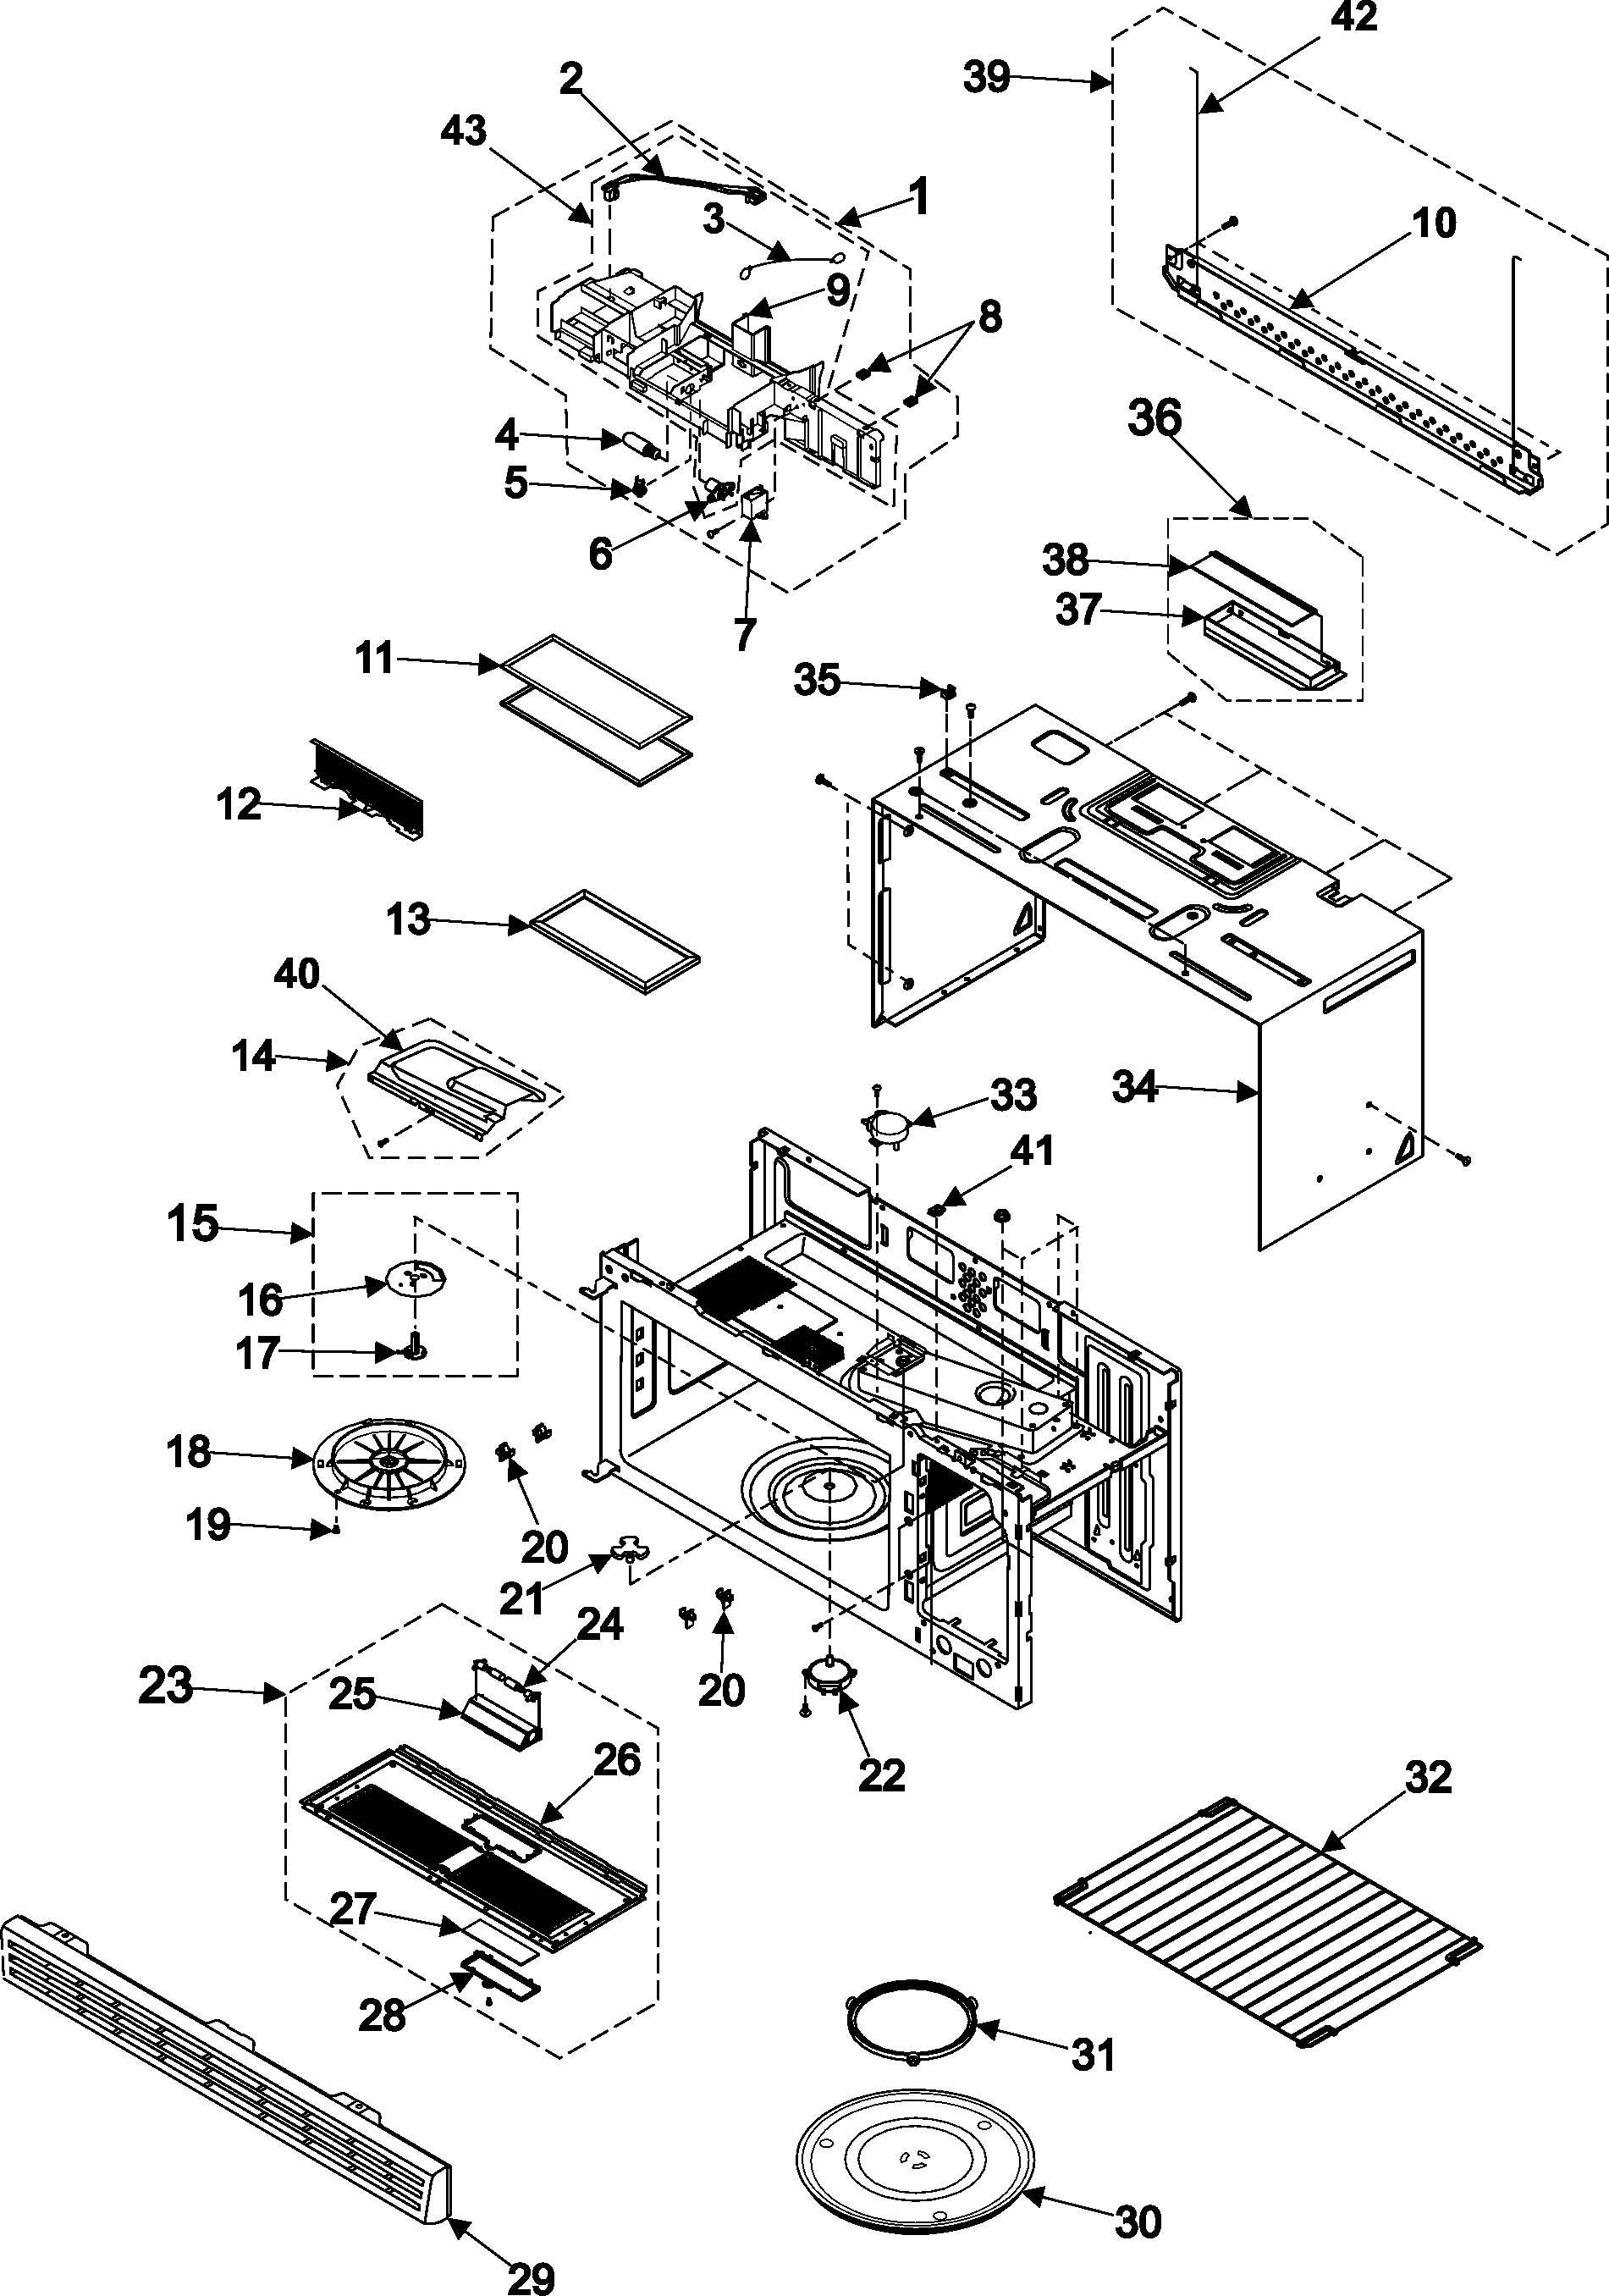 32 Samsung Microwave Parts Diagram Wiring Diagram List